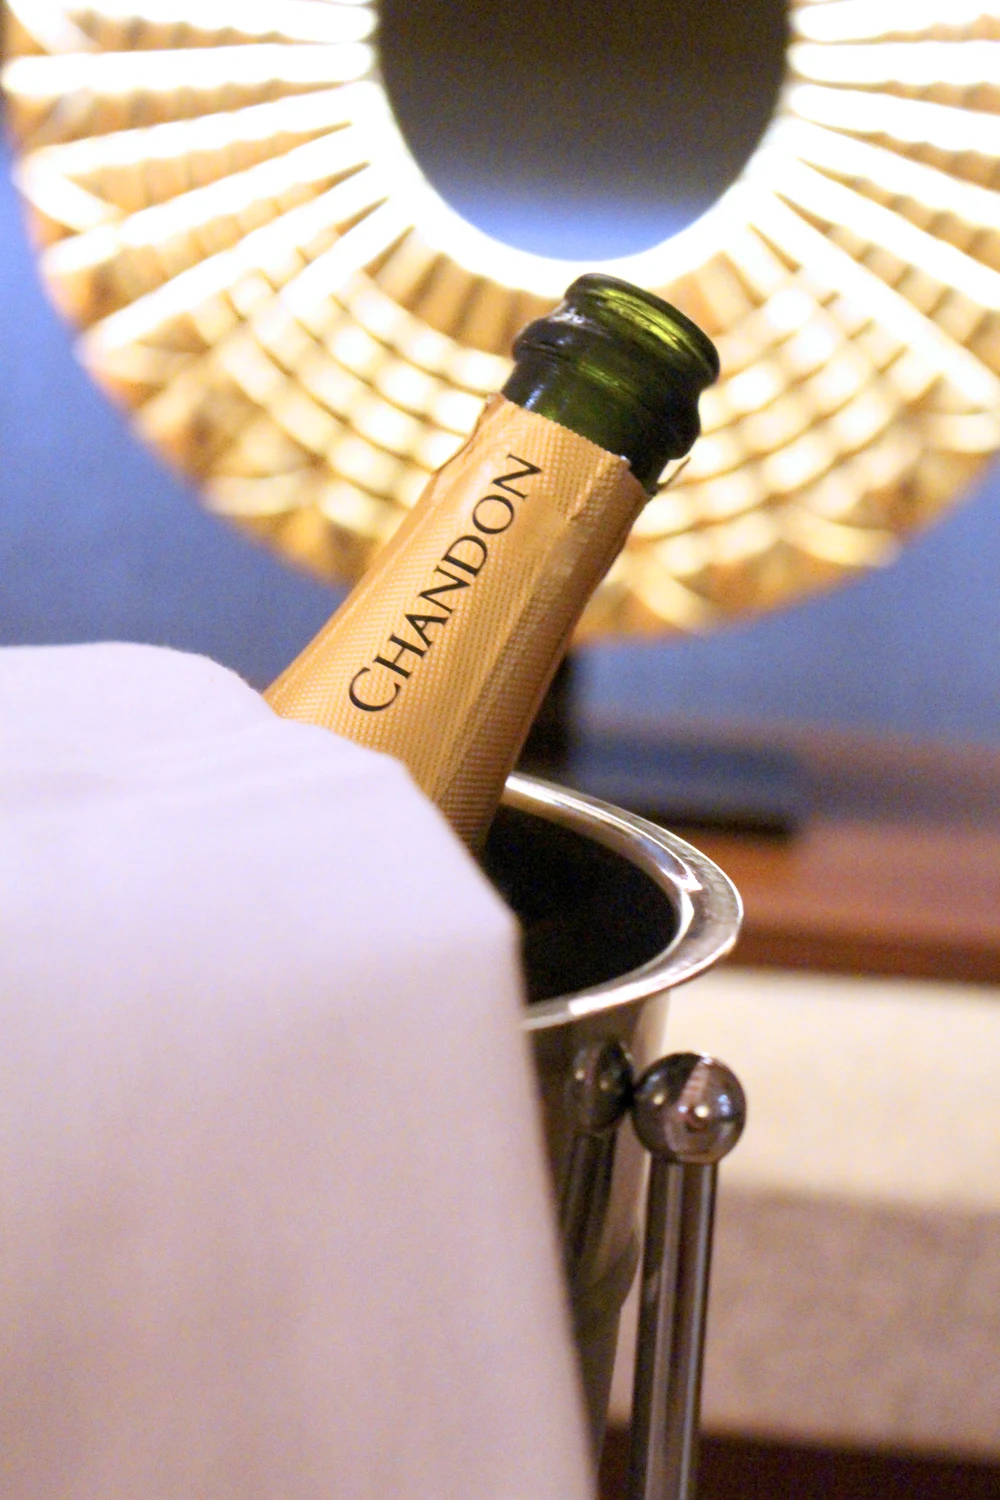 Chandon sparkling wine at Sumaq, Aguas Calientes, Peru - lifestyle & travel blog